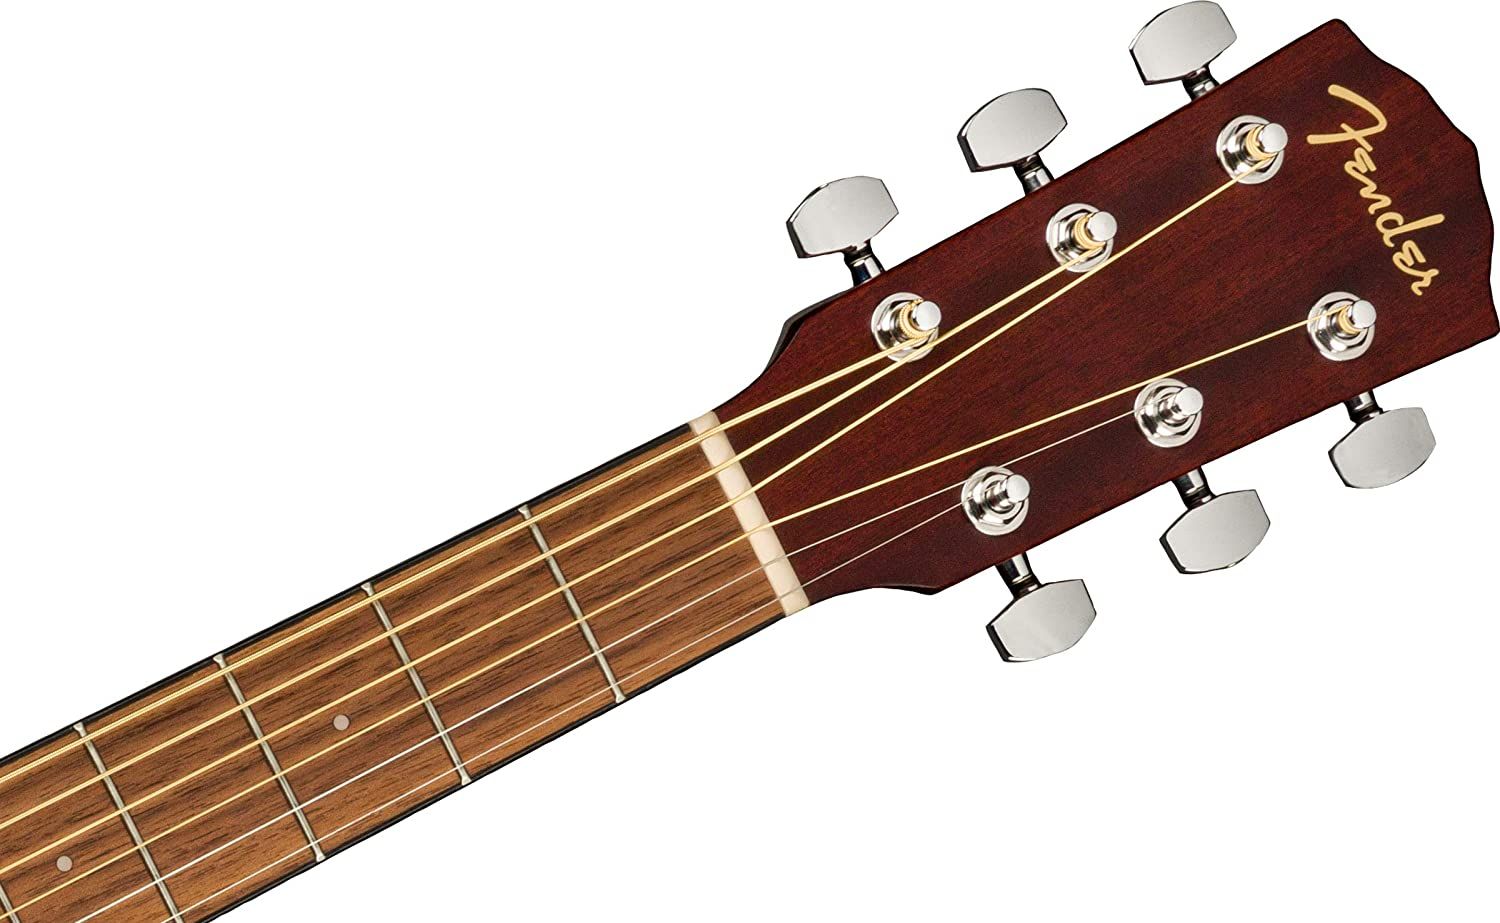 Fender CC-60S Solid Top Concert Acoustic Guitar's fret board